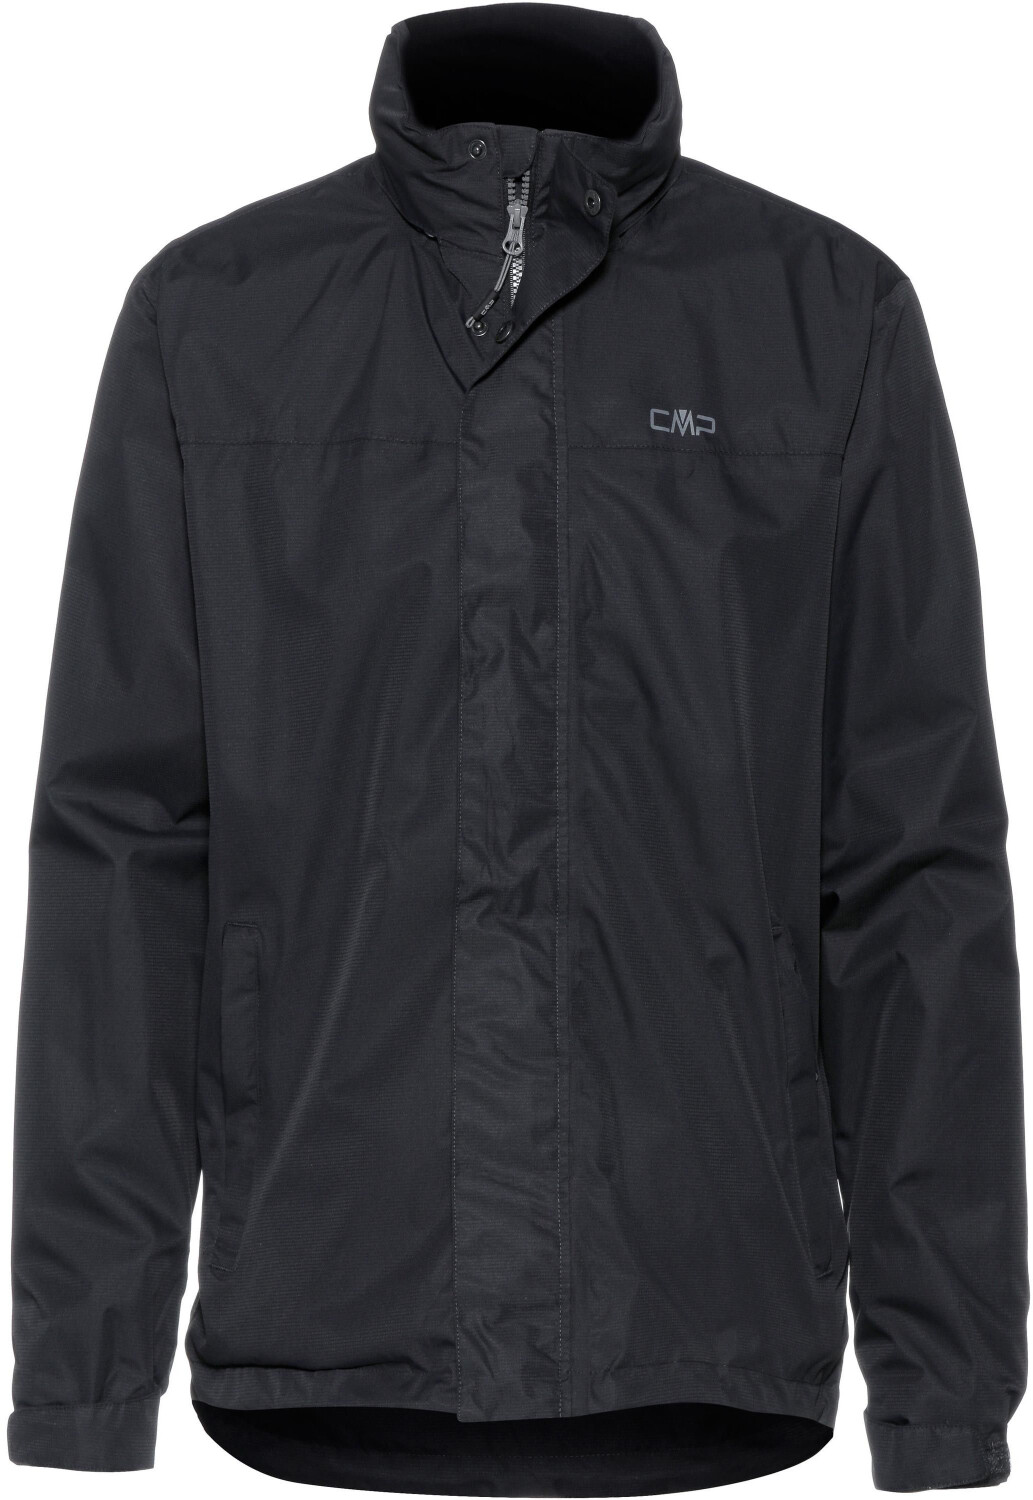 Jacket ab Waterproof bei (39X7367) € CMP 21,99 Preisvergleich Ripstop in | fabric